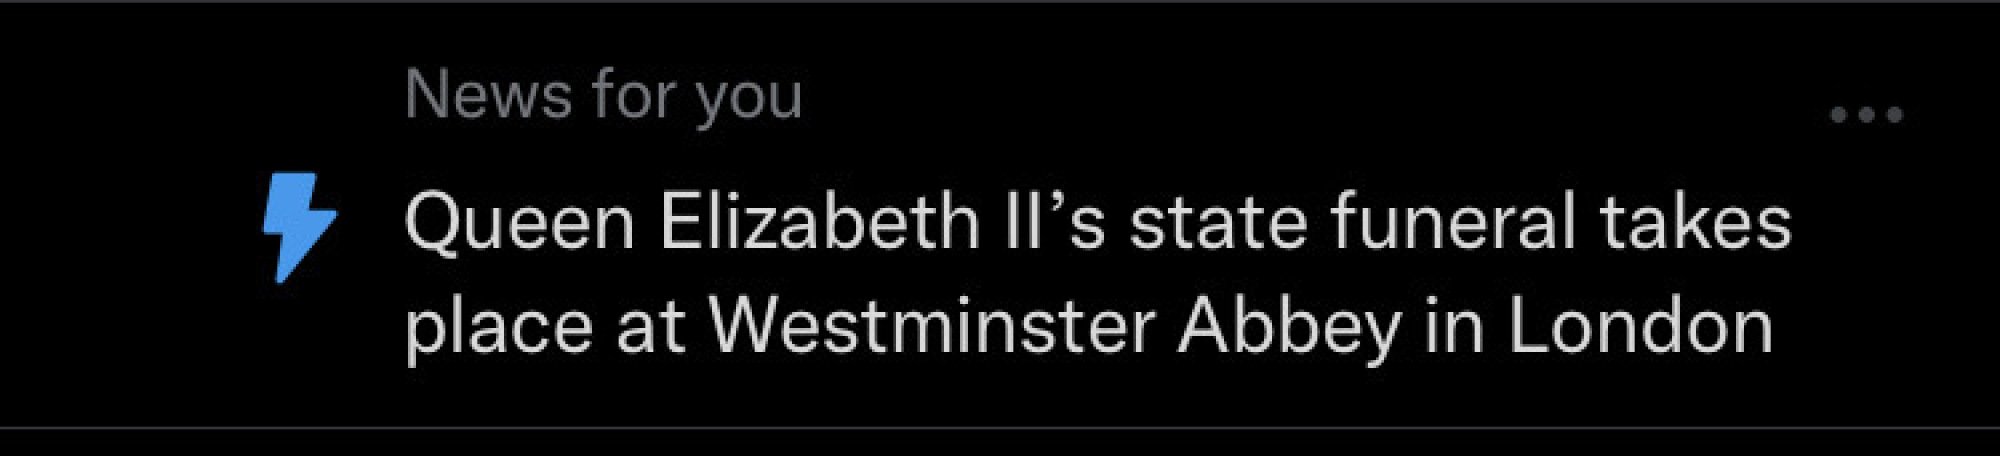 Twitter notification about Queen Elizabeth II's state funeral